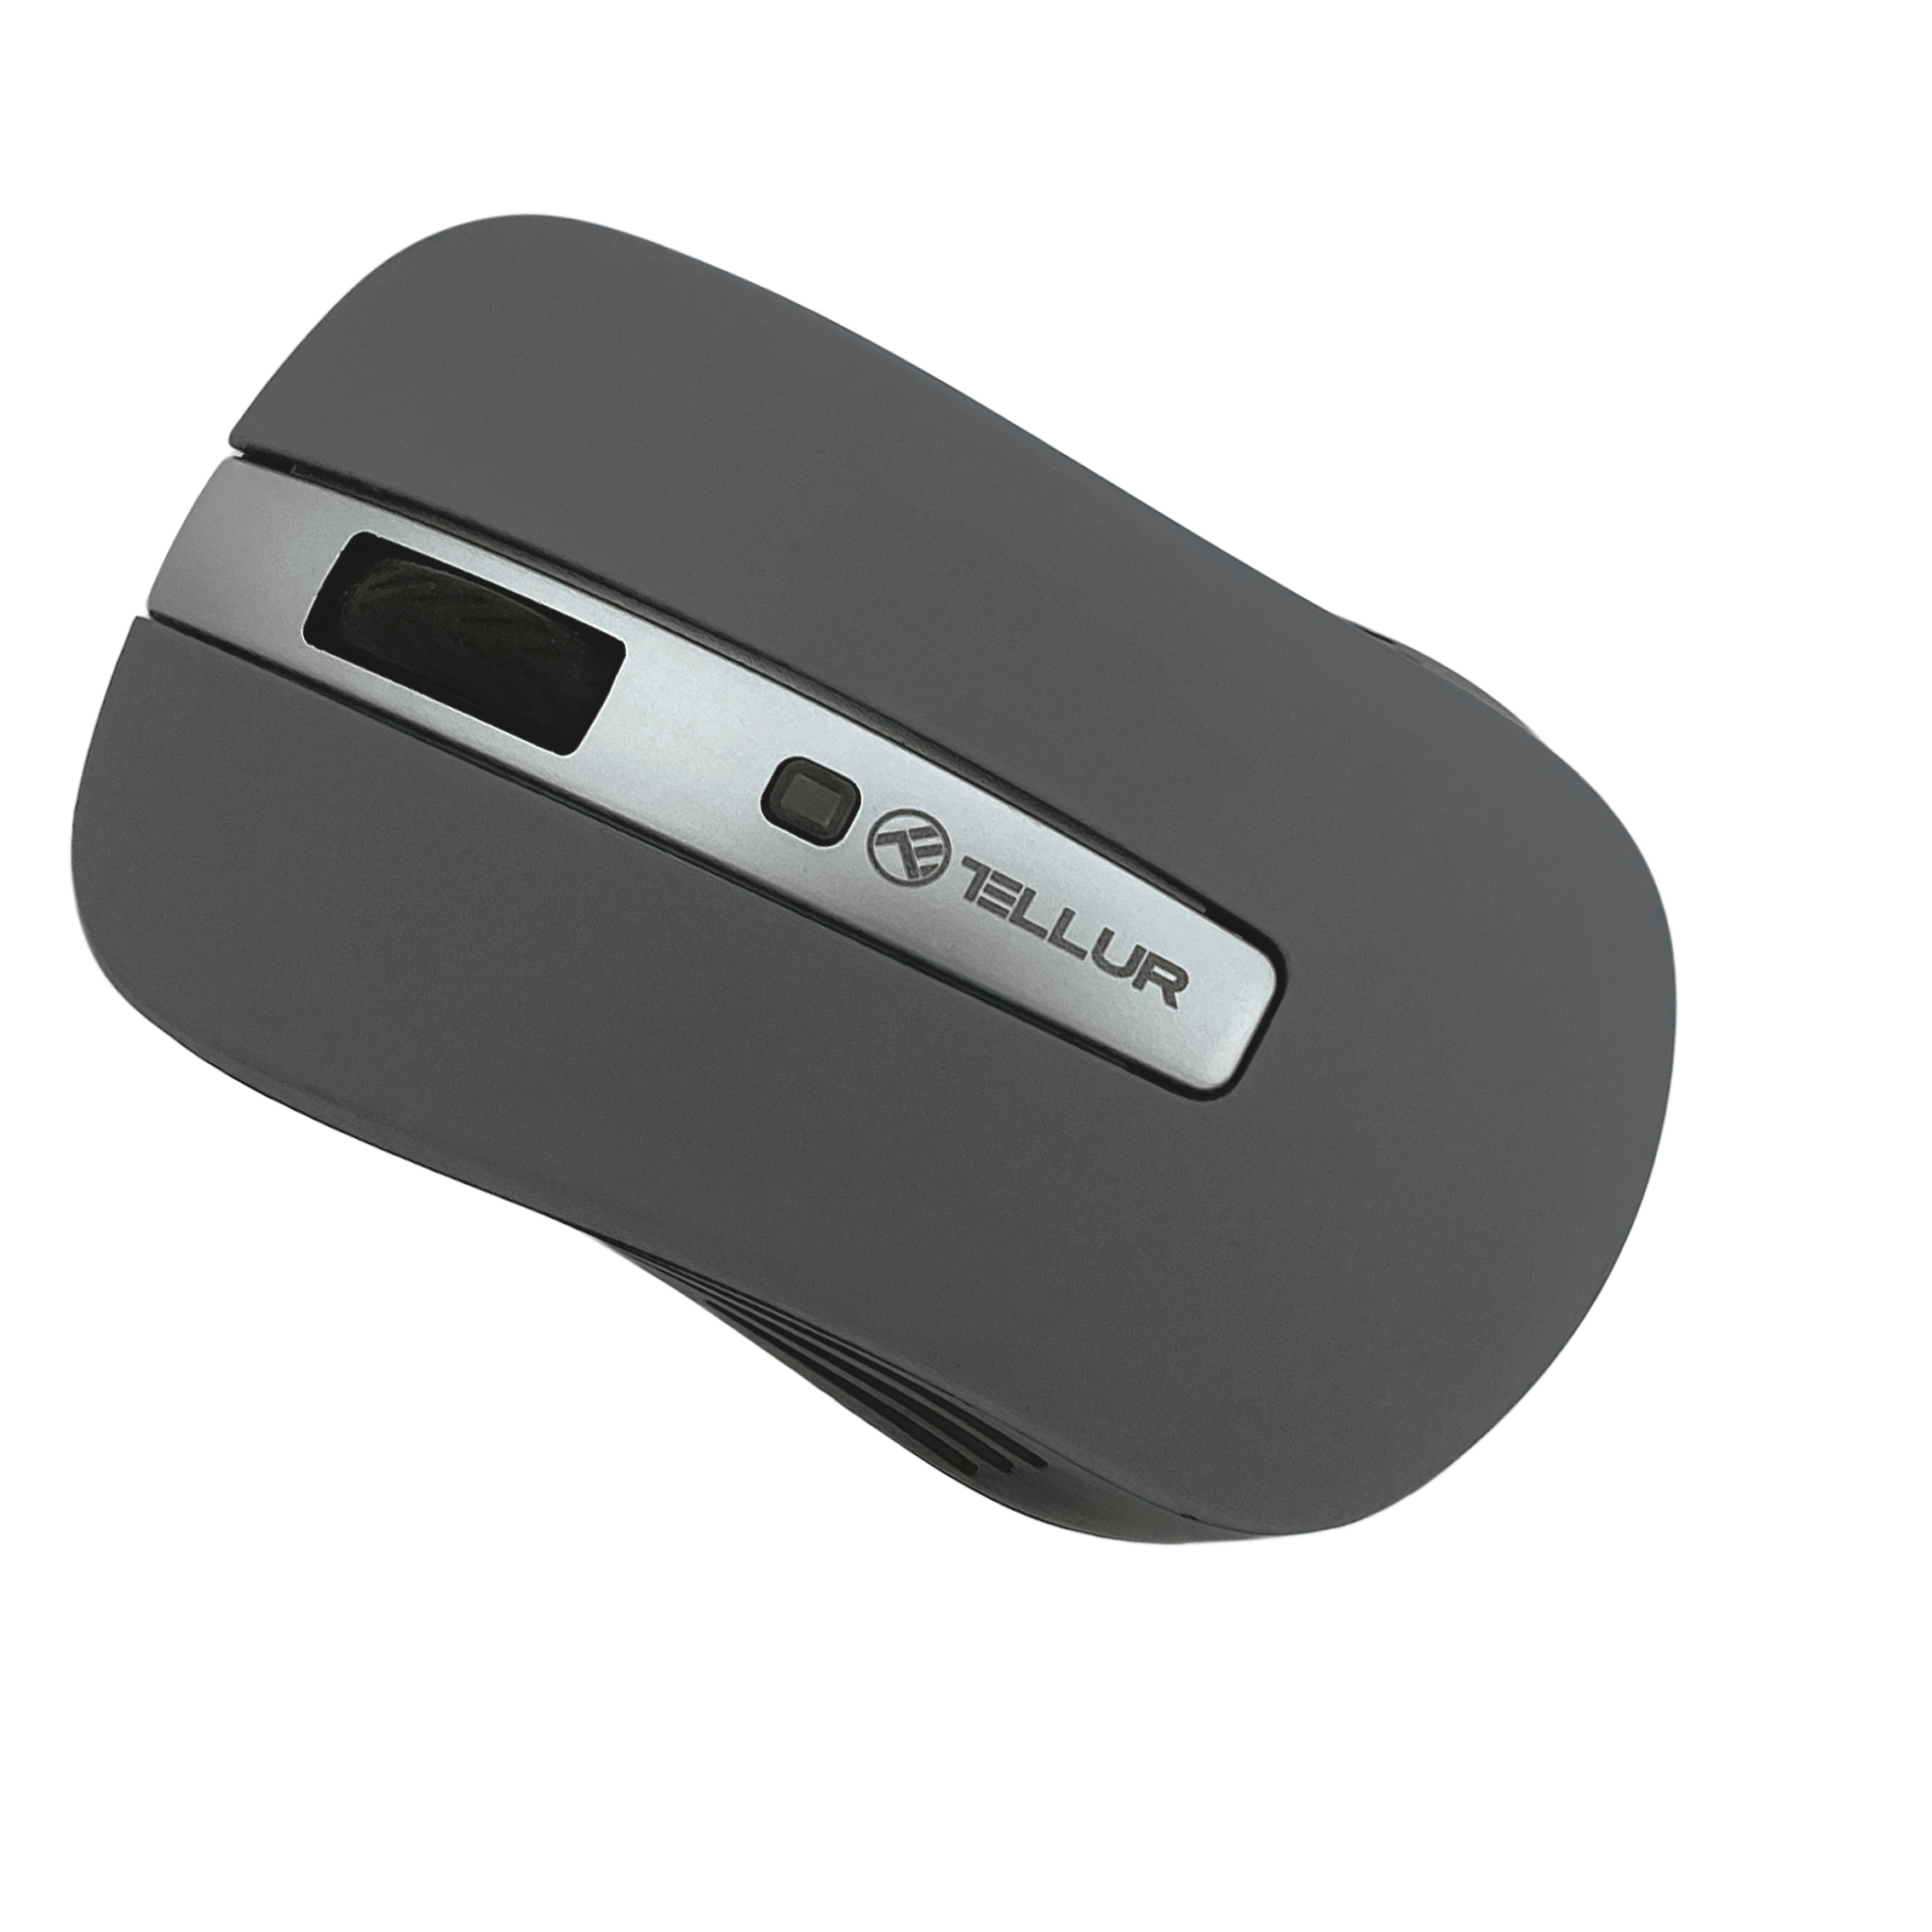 Mouse Wireless Tellur Basic, Plug and Play, LED, 800-1600 DPI reglabil, 4 Butoane, Gri Inchis (închis) imagine Black Friday 2021